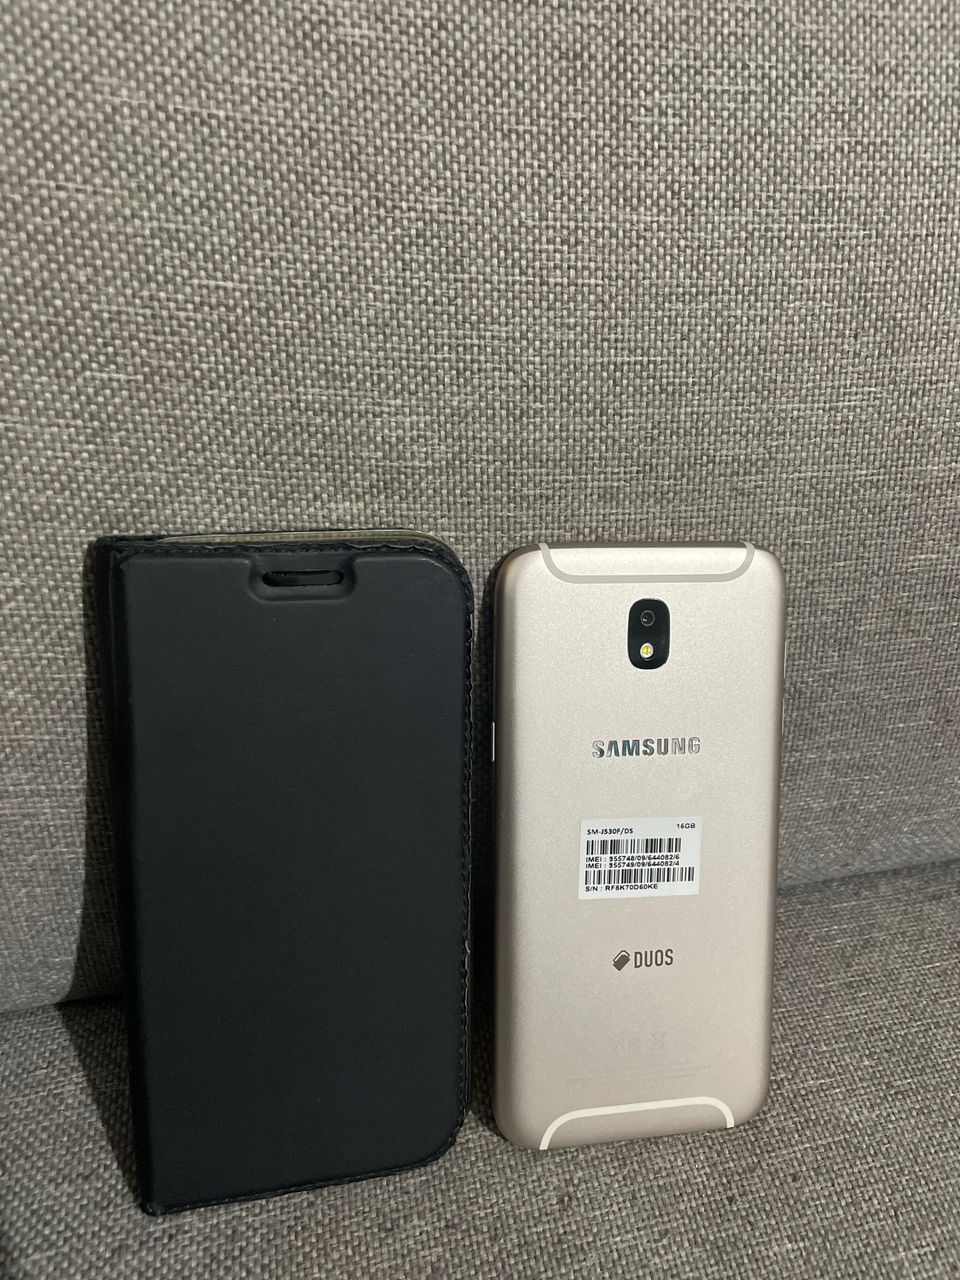 Samsung J5 2017 DUOS (kaksi sim-korttia)